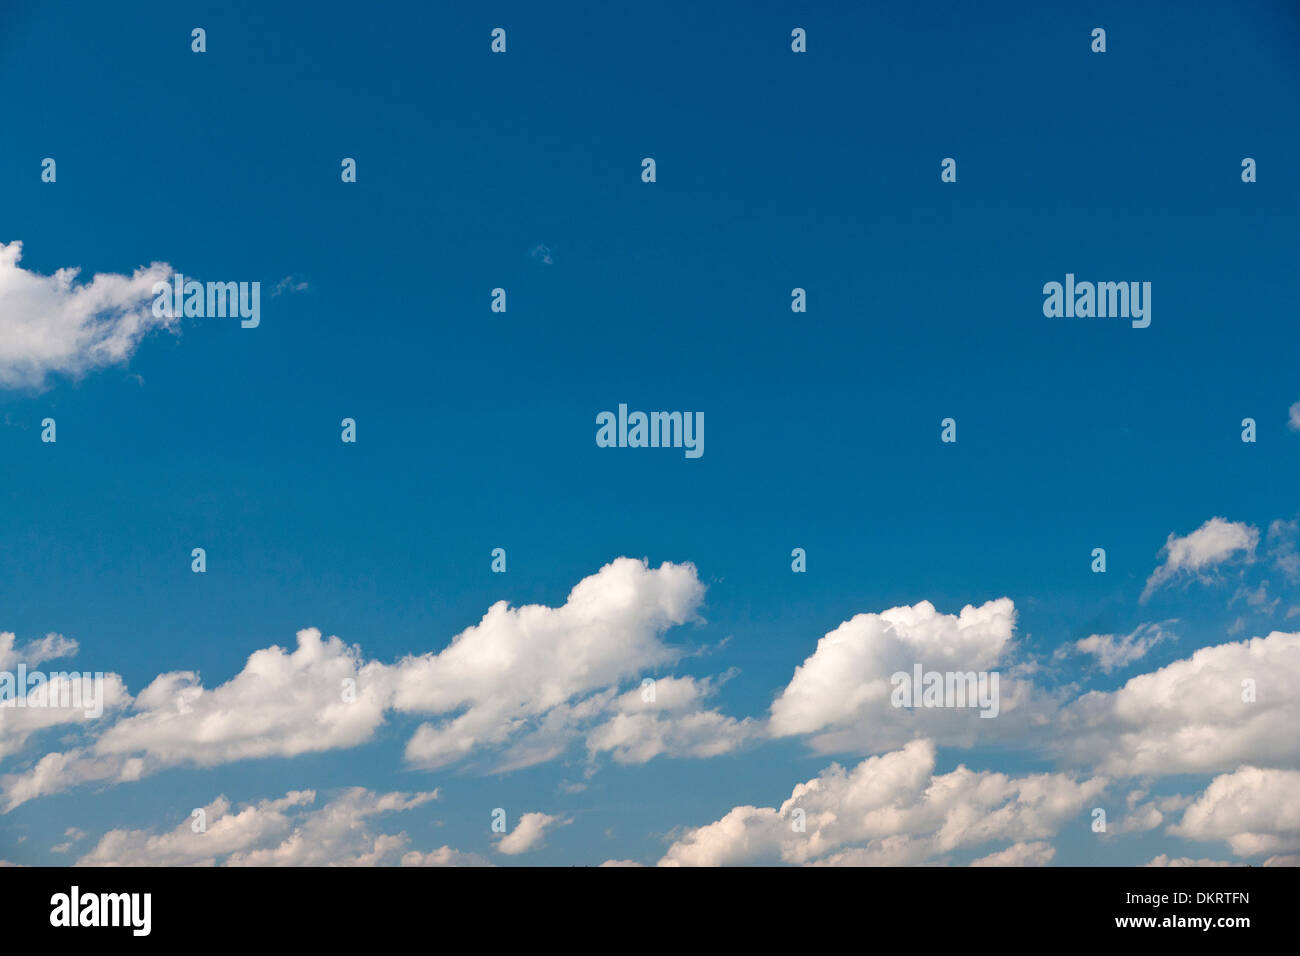 Germany, Europe, sky, blue sky, clouds, fleecy clouds, cumulus clouds, Cumulus, cloud formation, blue, white, weather, Stock Photo